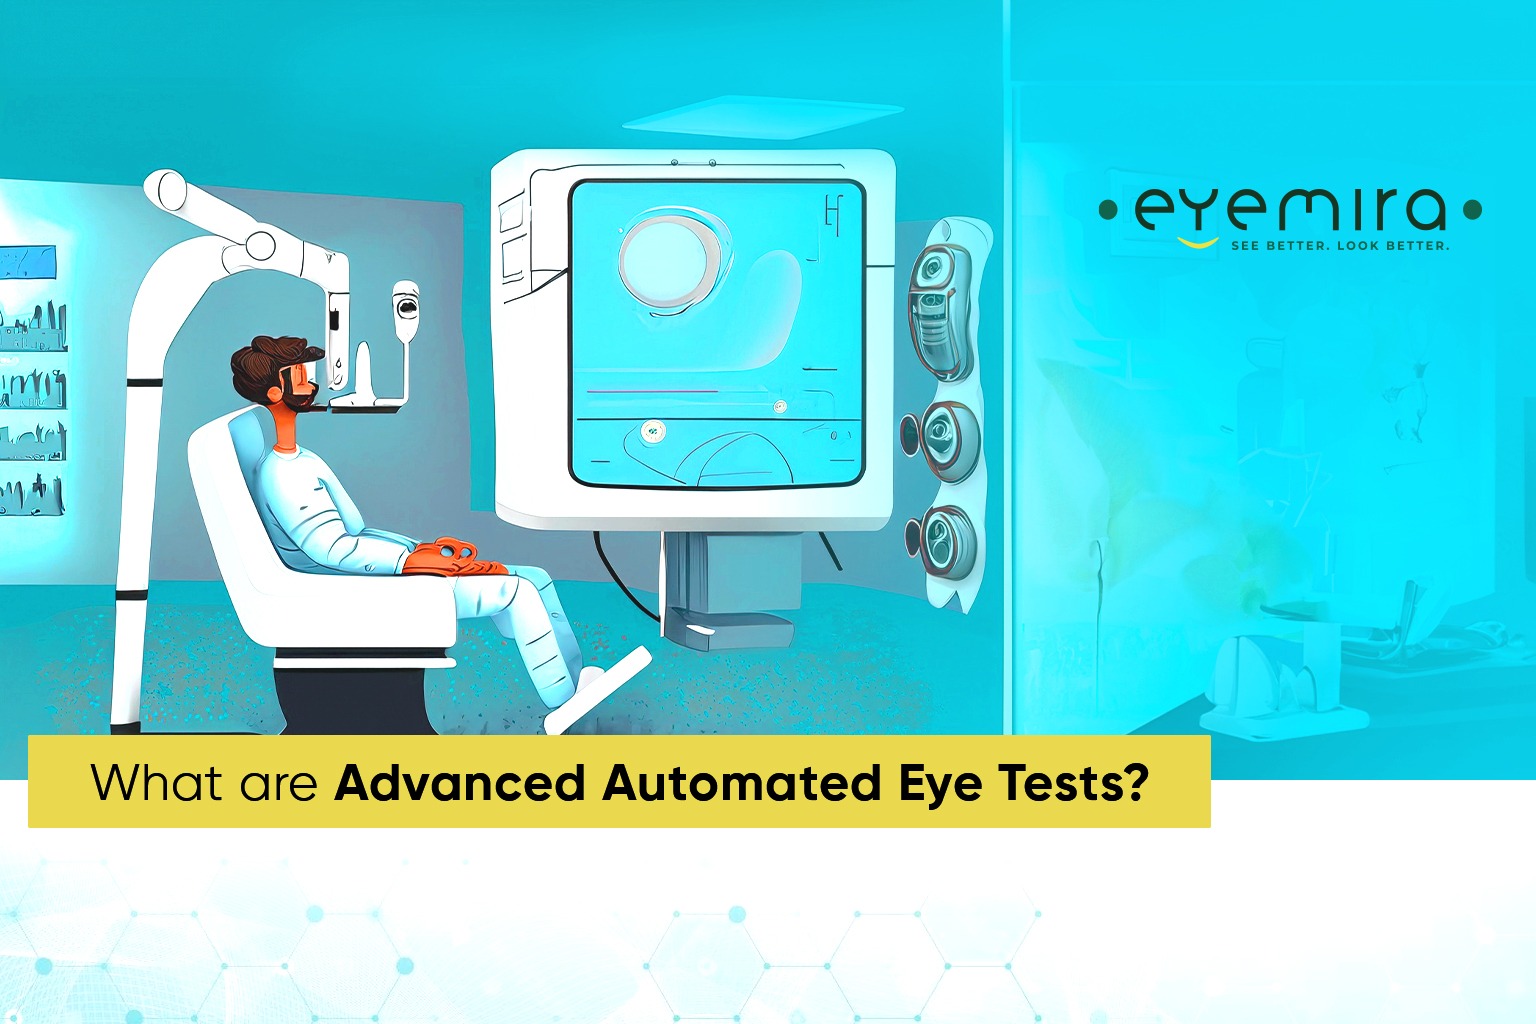 Advanced Automated Eye Tests